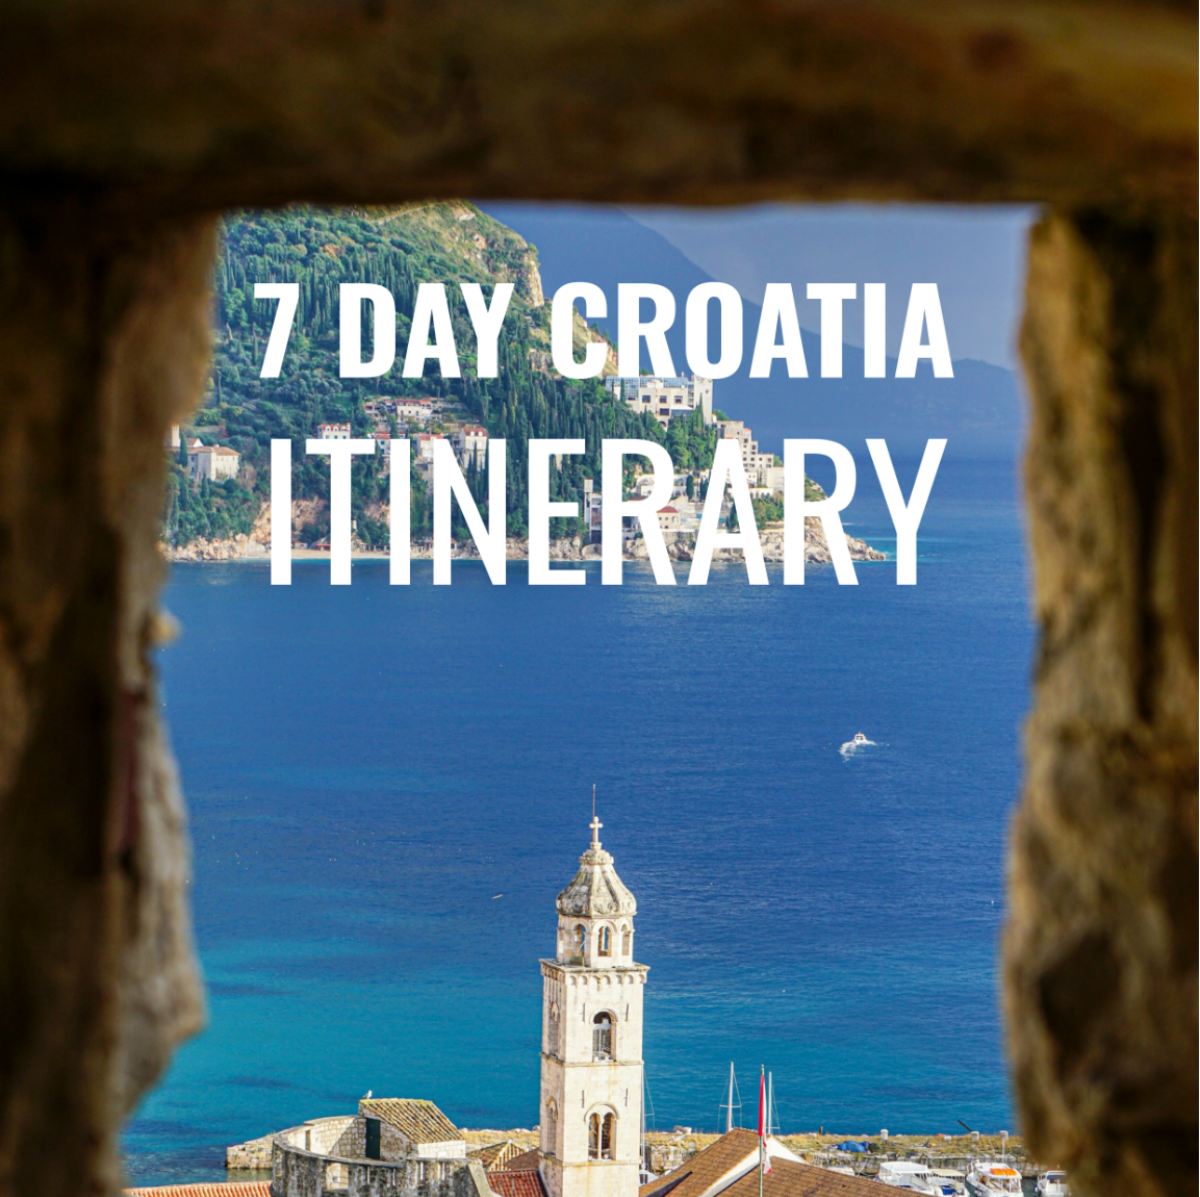 7 Day Croatia Itinerary Template